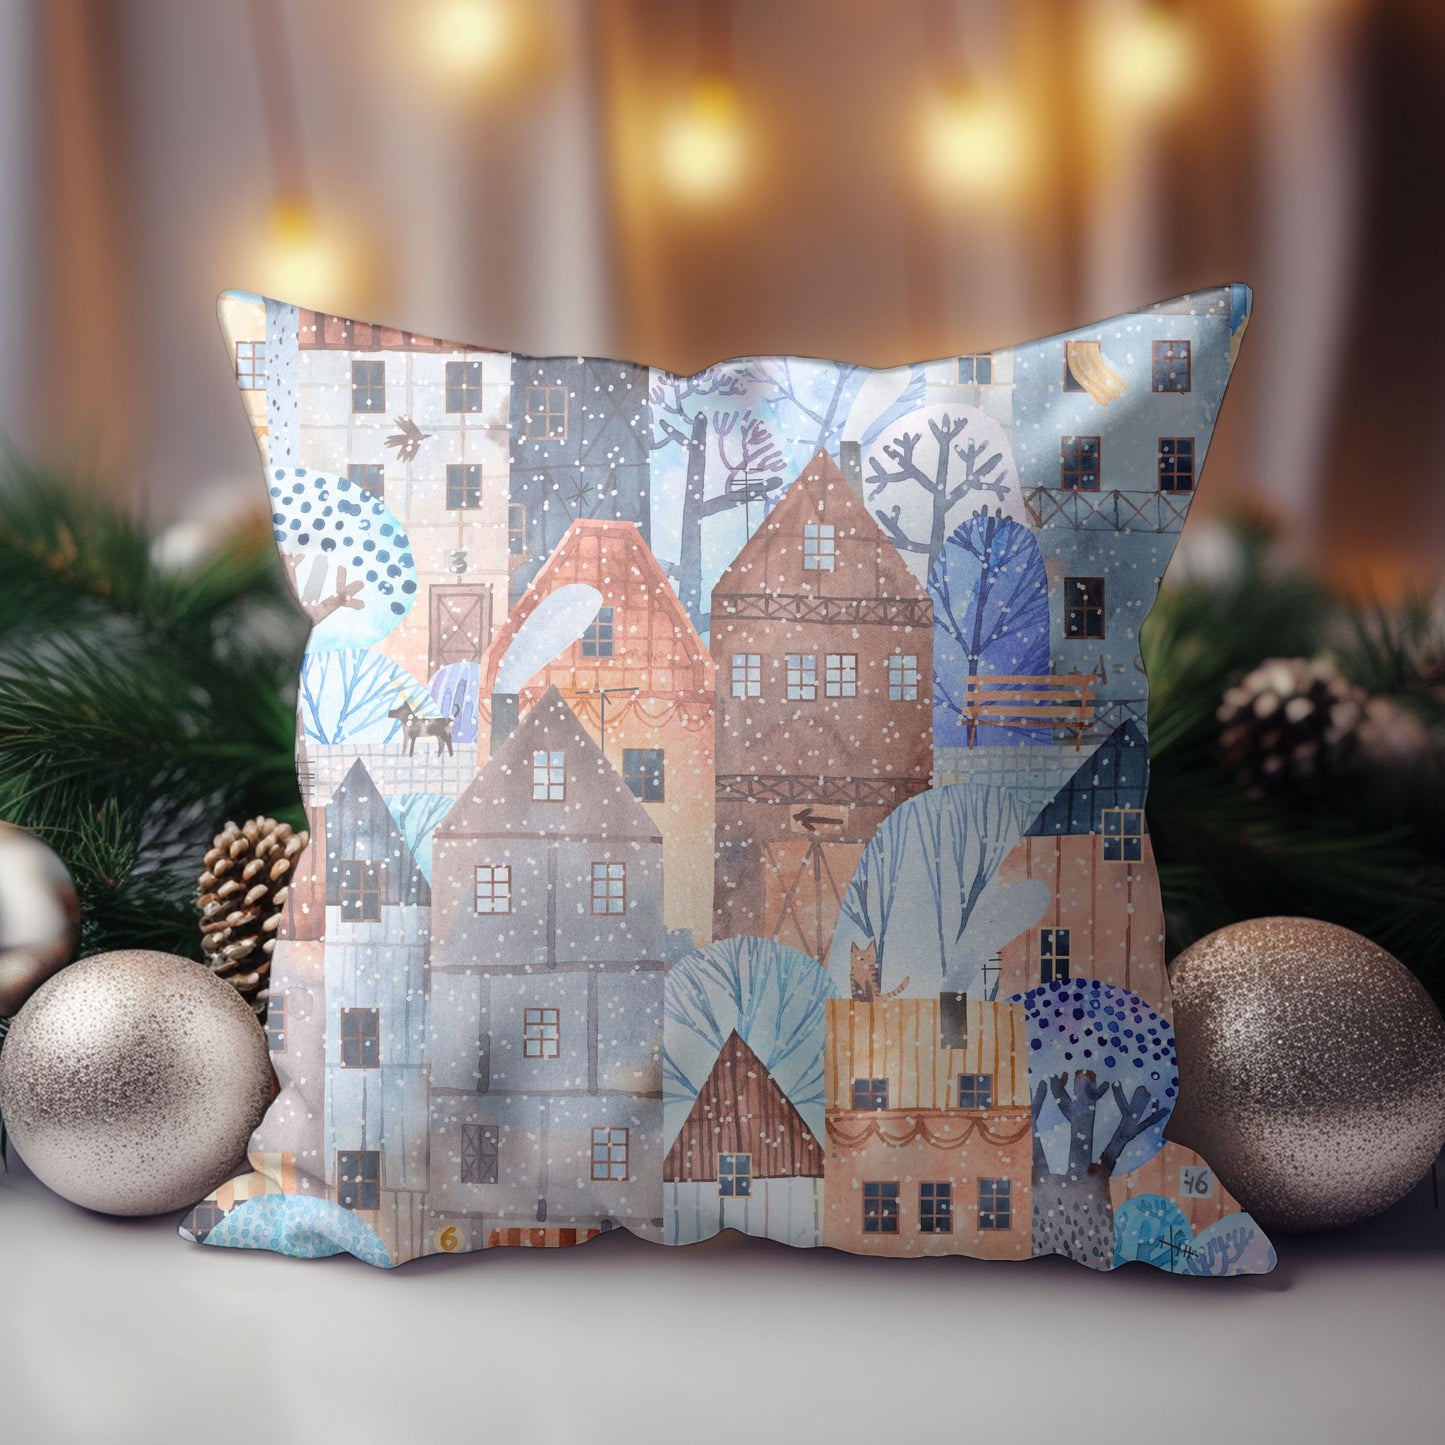 Christmas-Themed Decorative Pillow with Nostalgic Retro Design